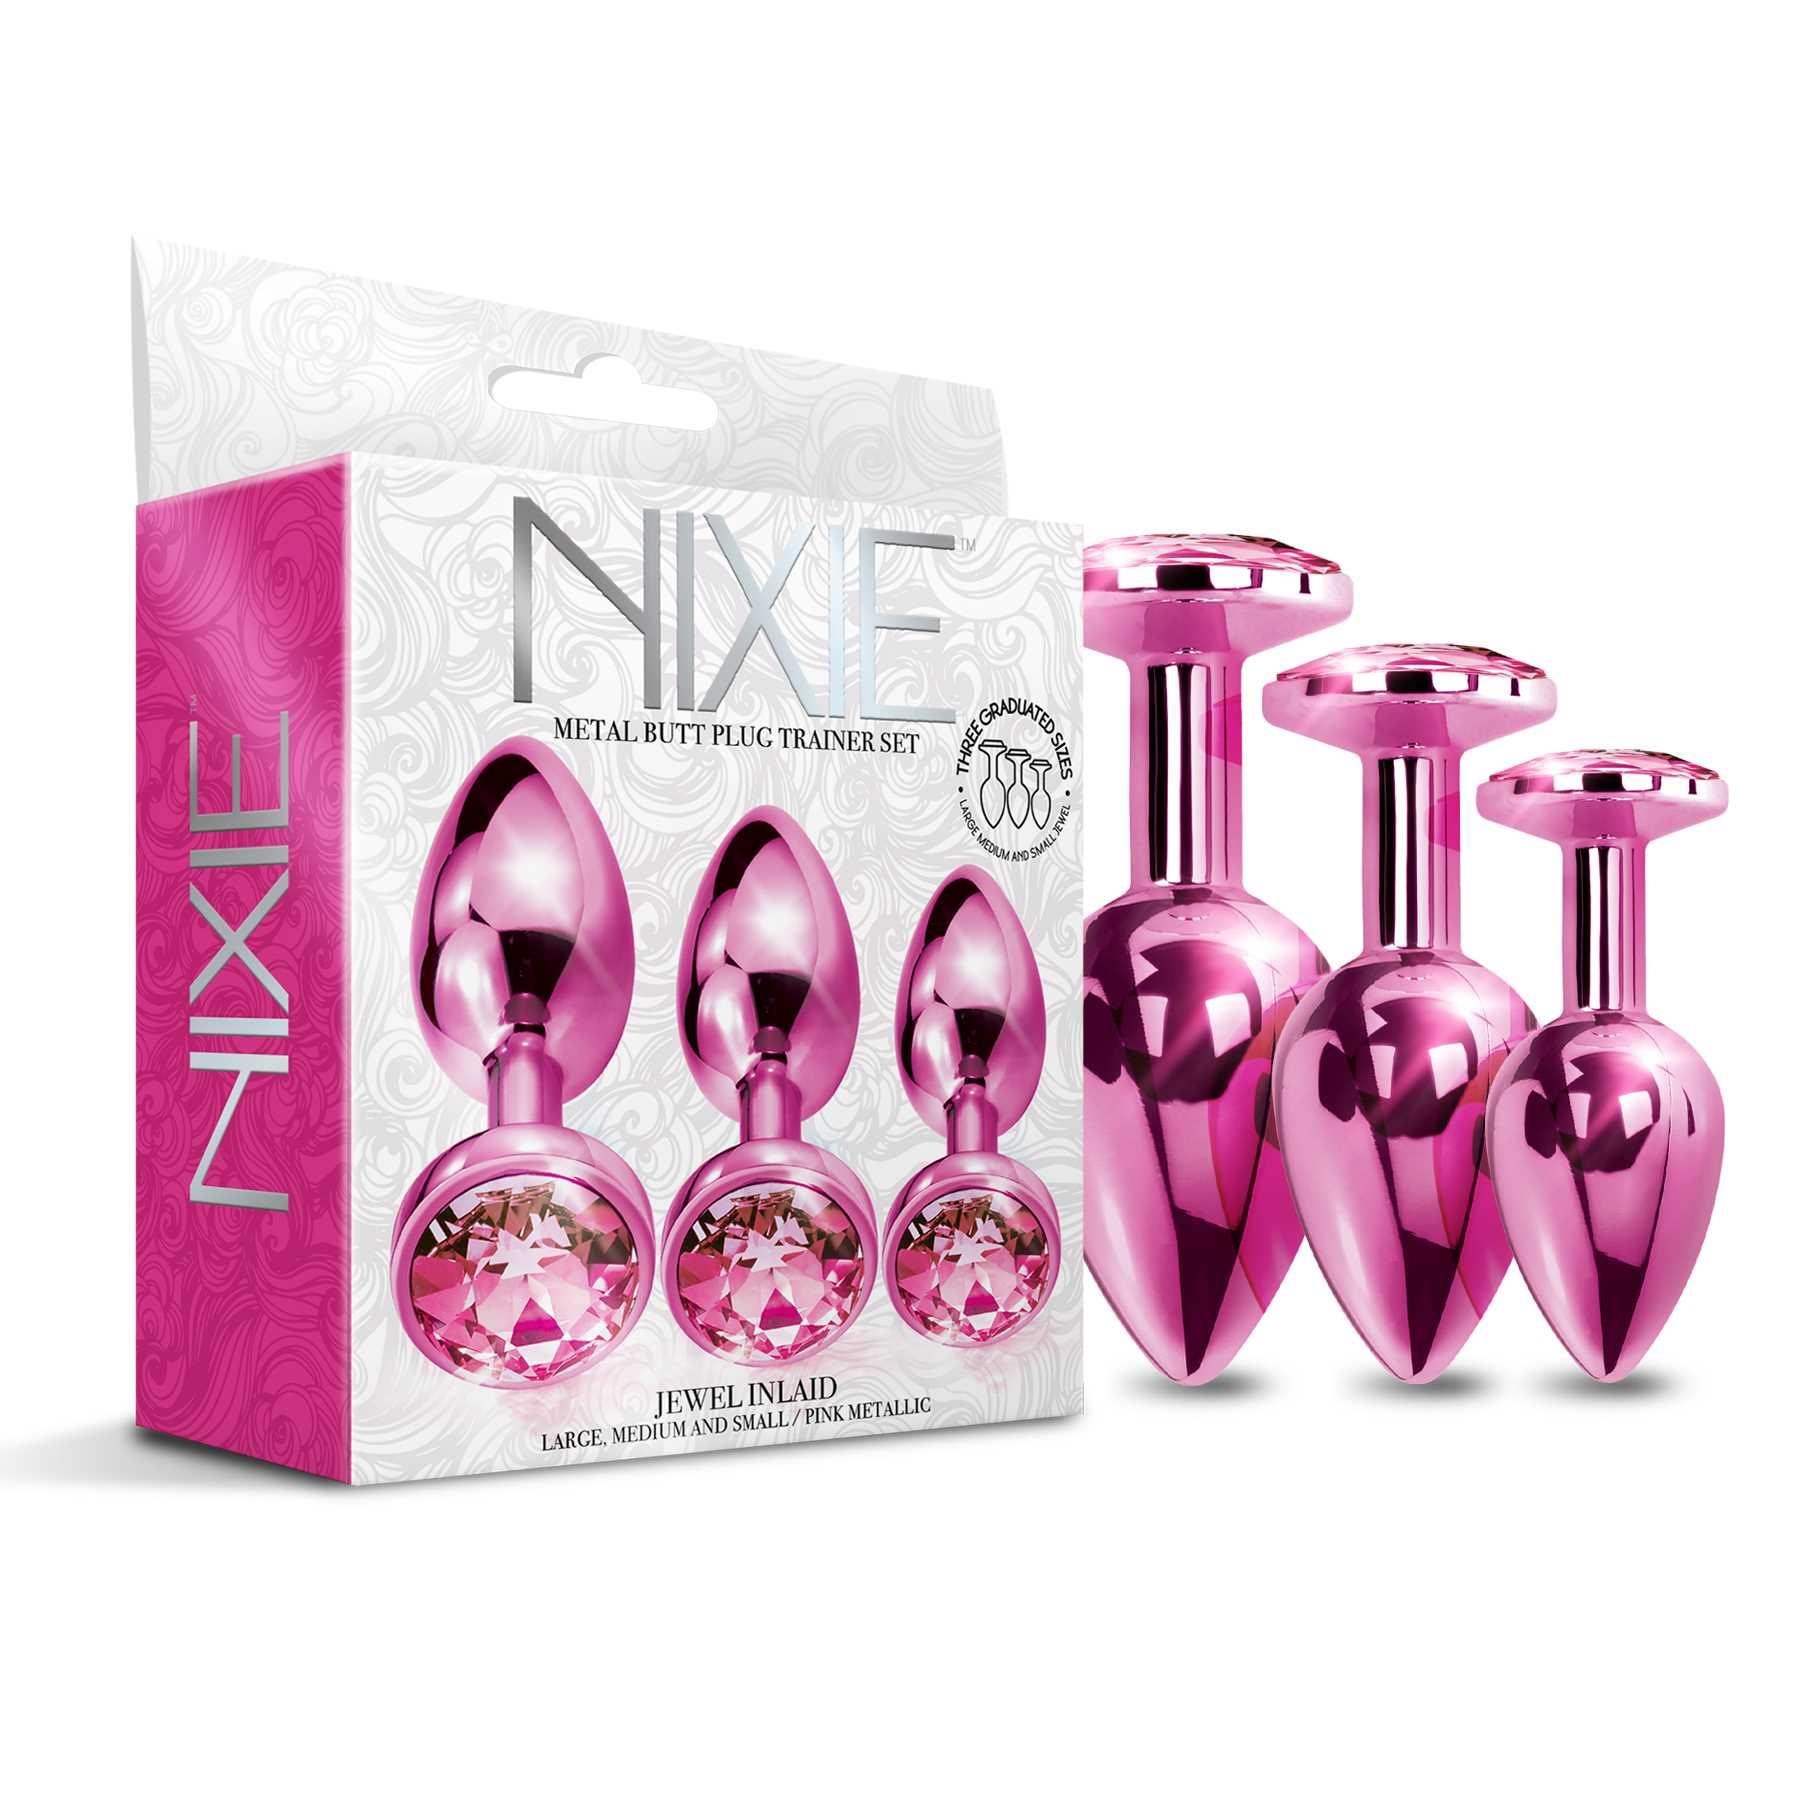 NIXIE Metal Butt Plug Trainer Set Metallic pink boxed set